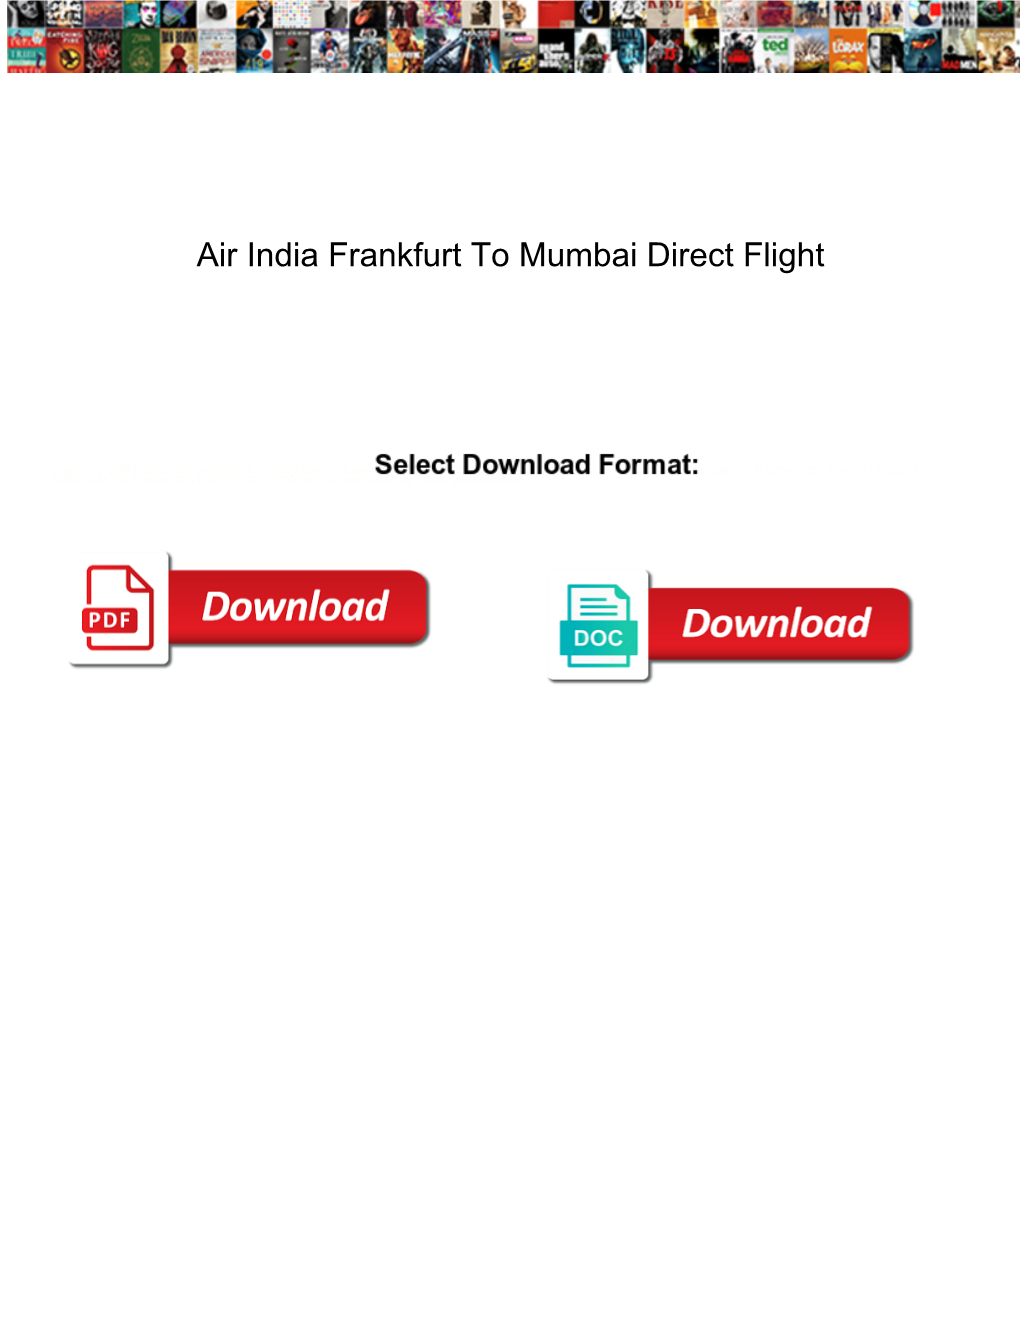 Air India Frankfurt to Mumbai Direct Flight